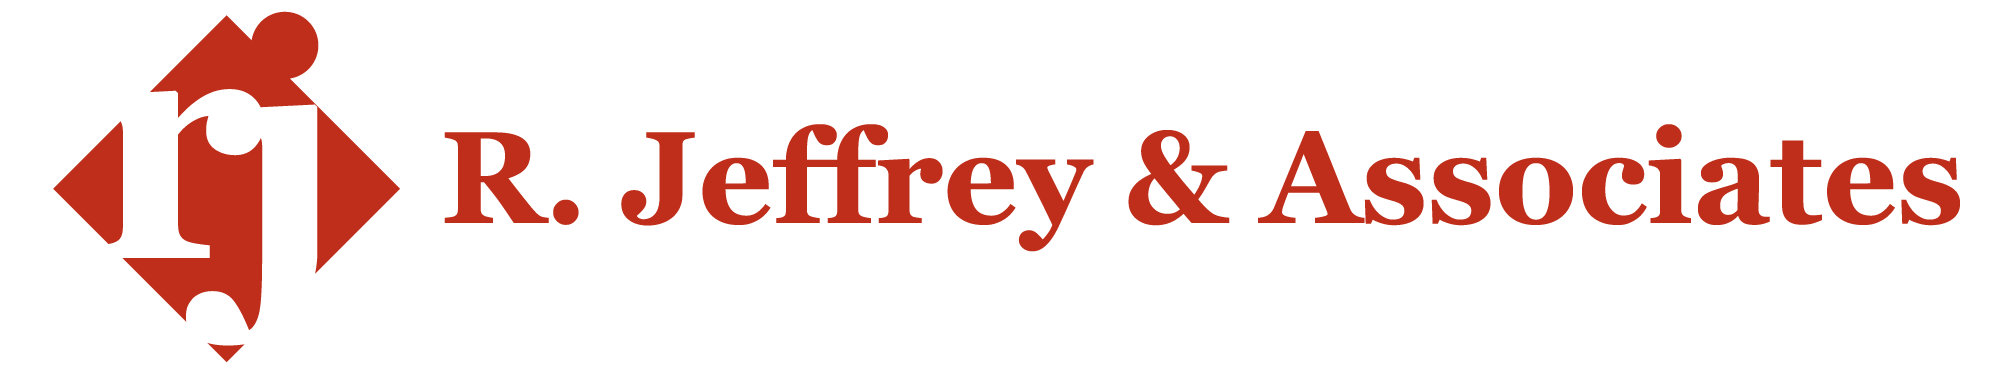 R. Jeffrey & Associates, Inc.